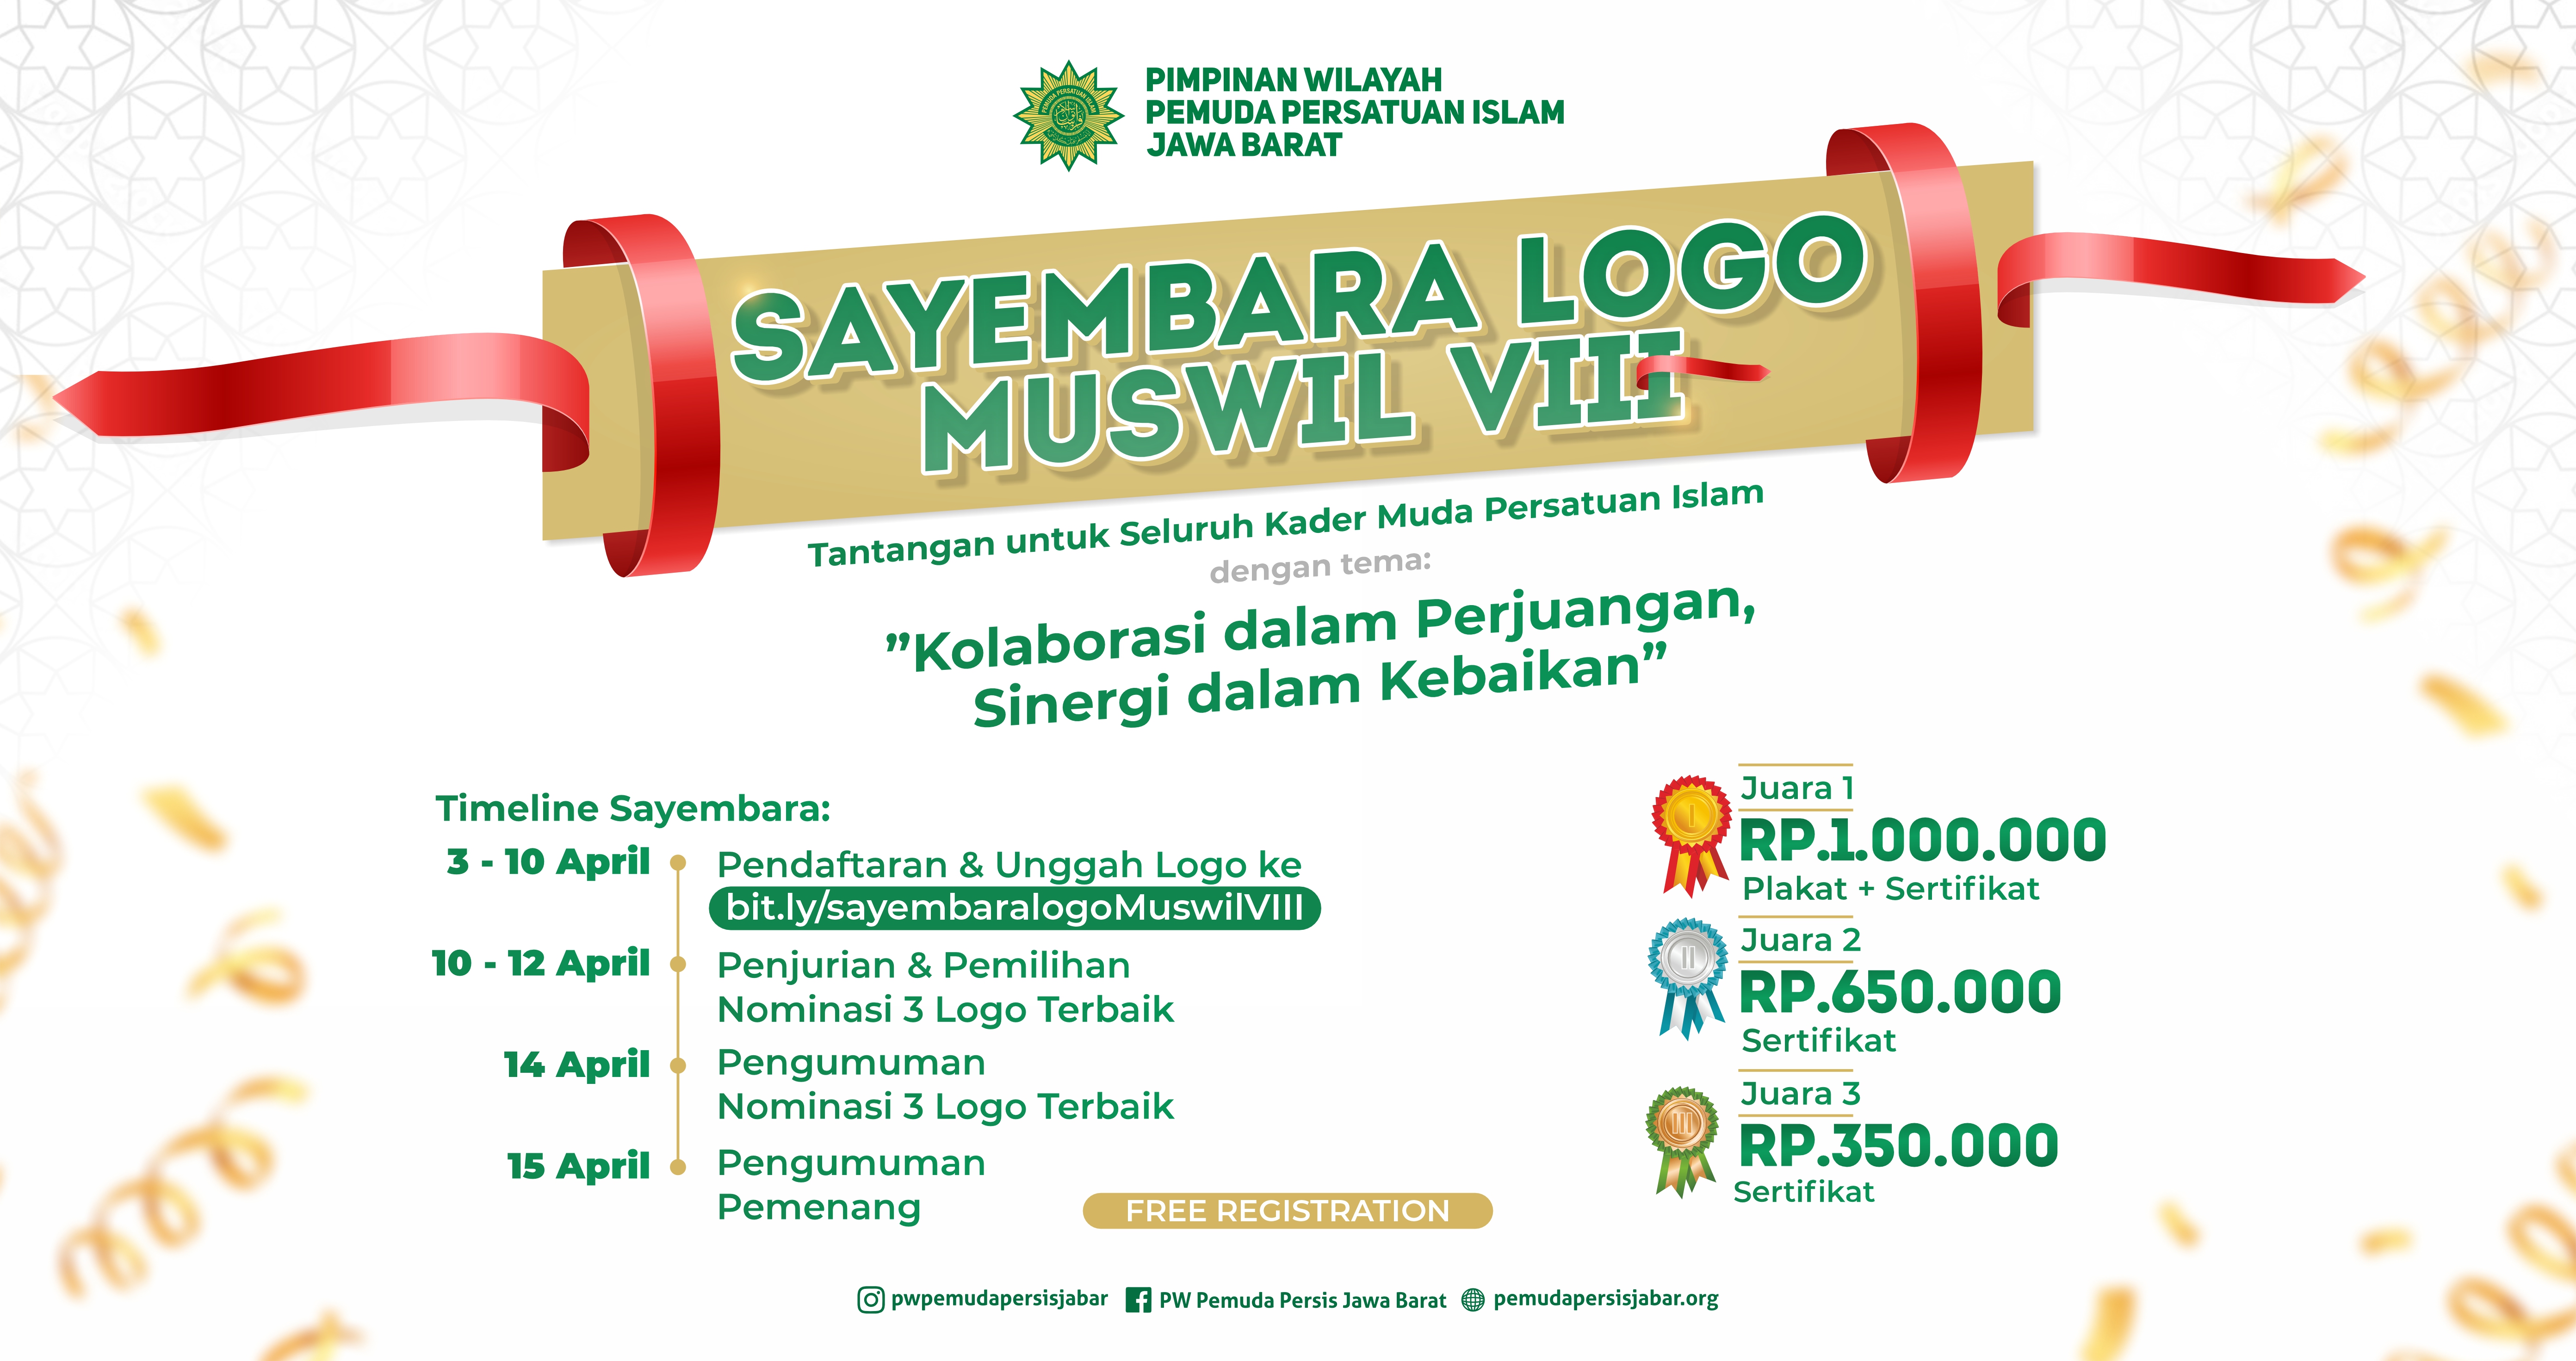 Jelang Musyawarah Wilayah VIII, PW Pemuda Persis Jawa Barat Gelar Sayembara Logo Muswil VIII untuk seluruh kader Persis